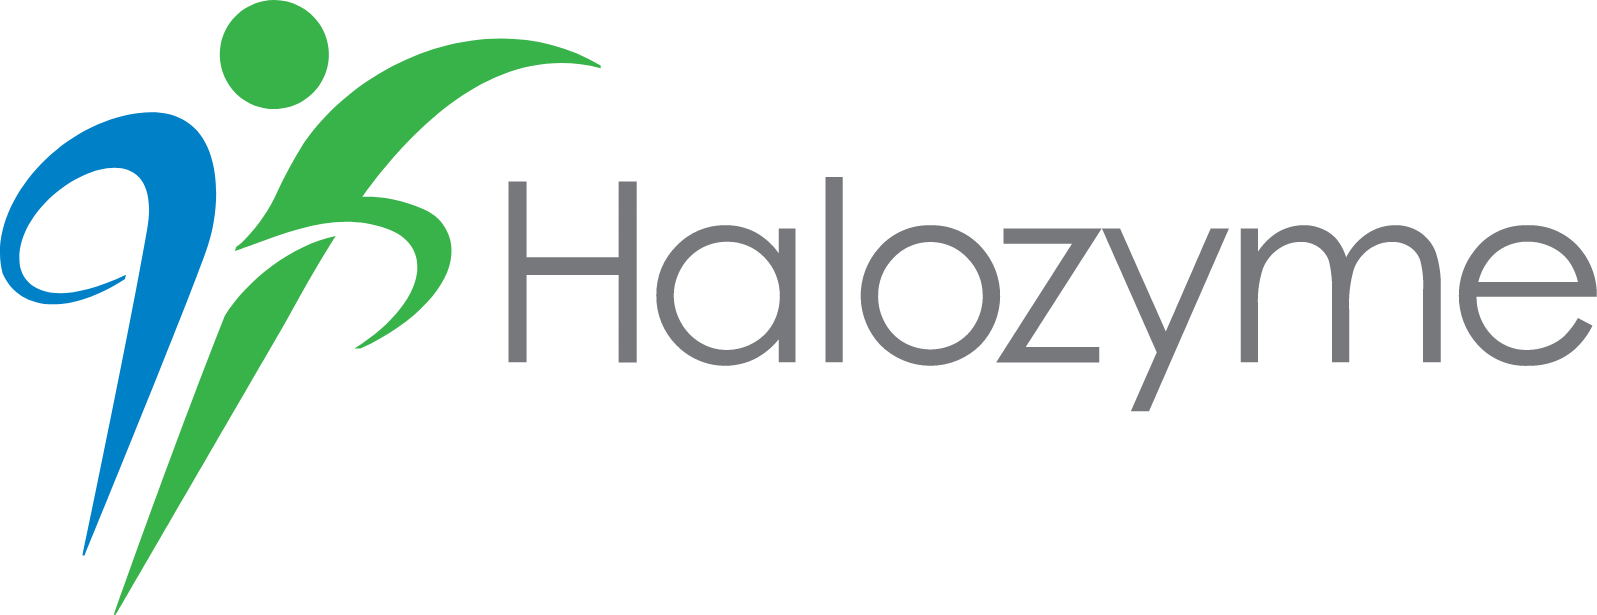 Halozyme Therapeutics logo large (transparent PNG)